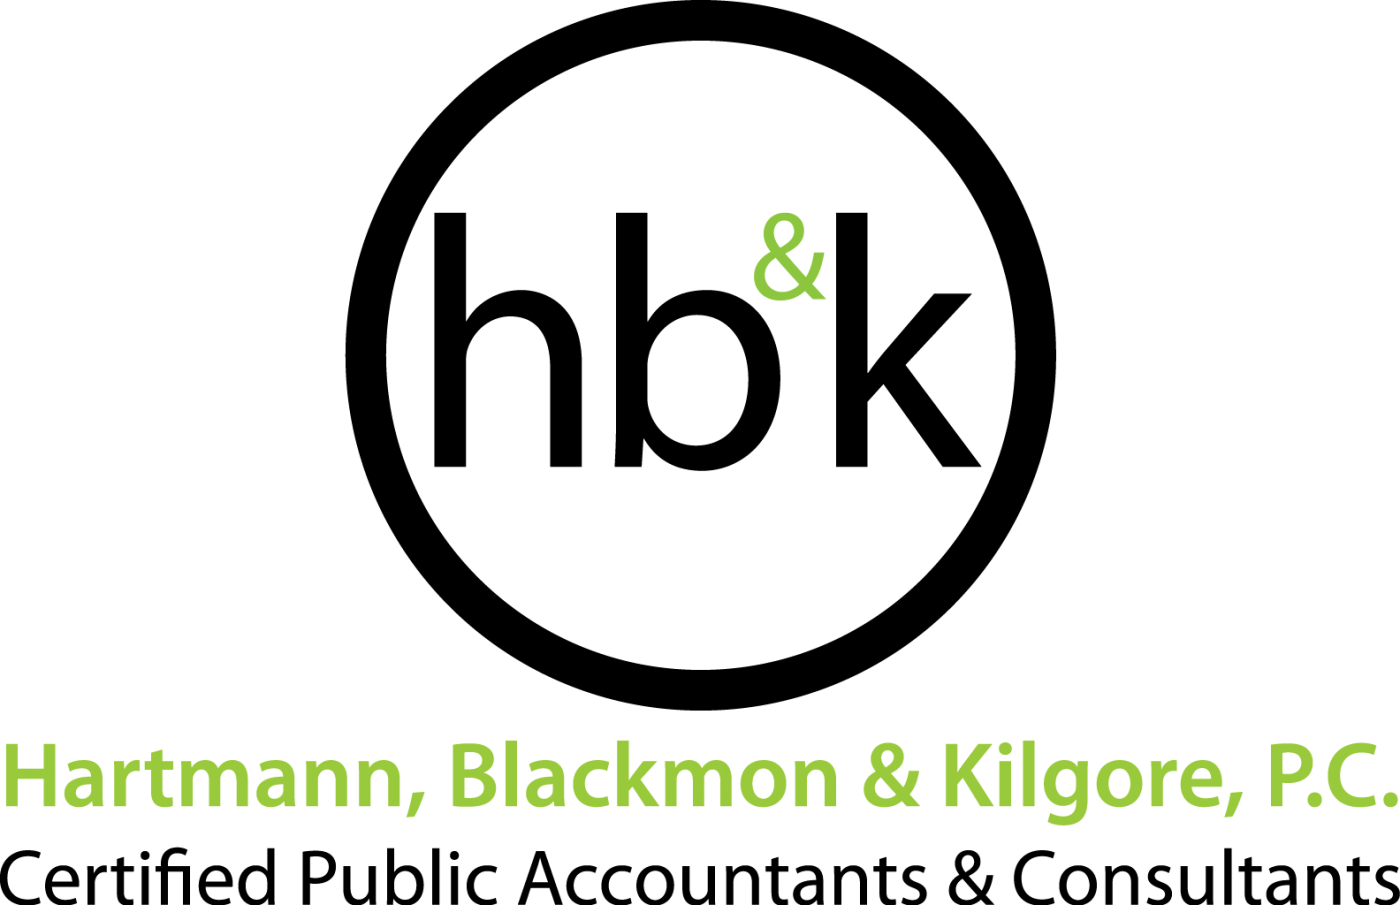 HBK Logo - HBK logo, Blackmon & Kilgore P.C